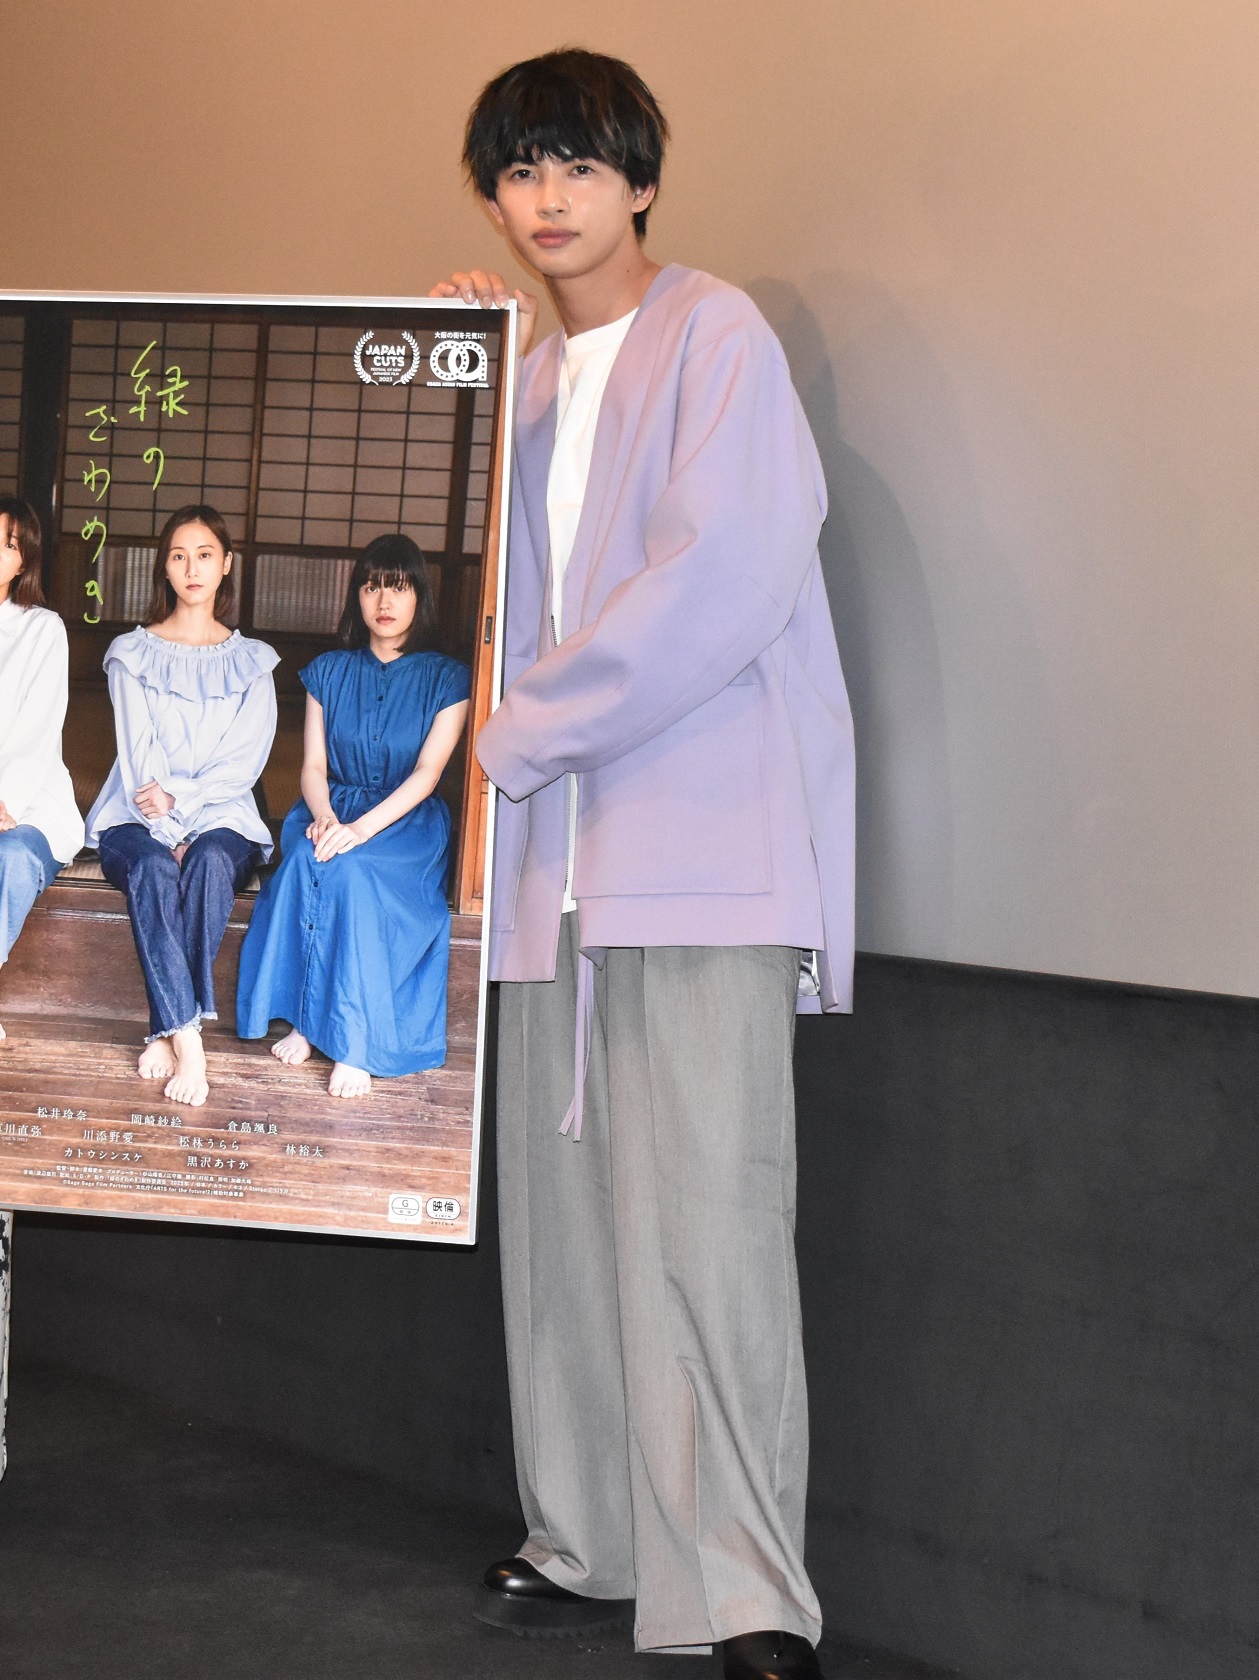 ONE N’ ONLY 草川直弥 映画「緑のざわめき」完成披露あいさつに出席 ファンからの「好きです」はうれしい!